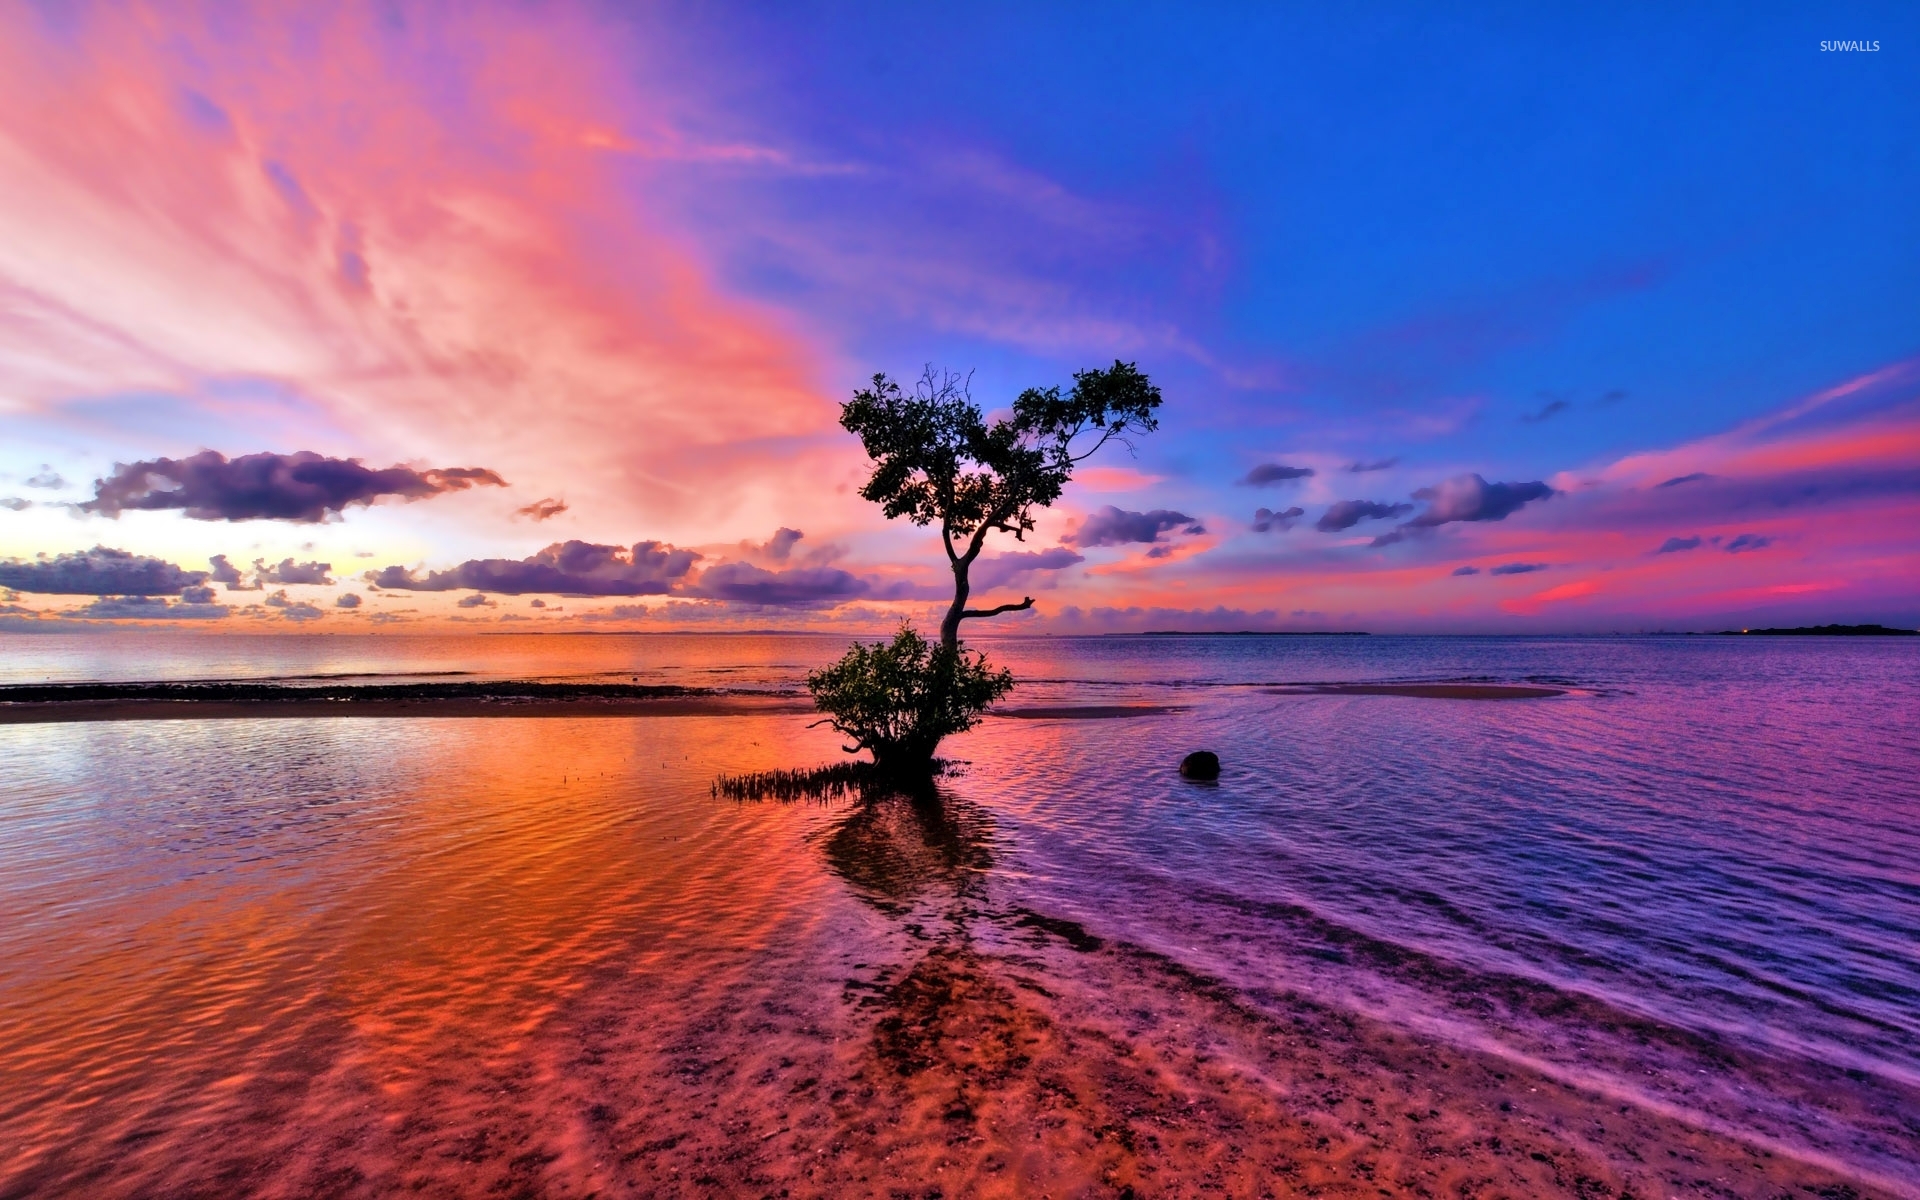 Beautiful Sunset Sky Behind The Lonesome Tree On Beach